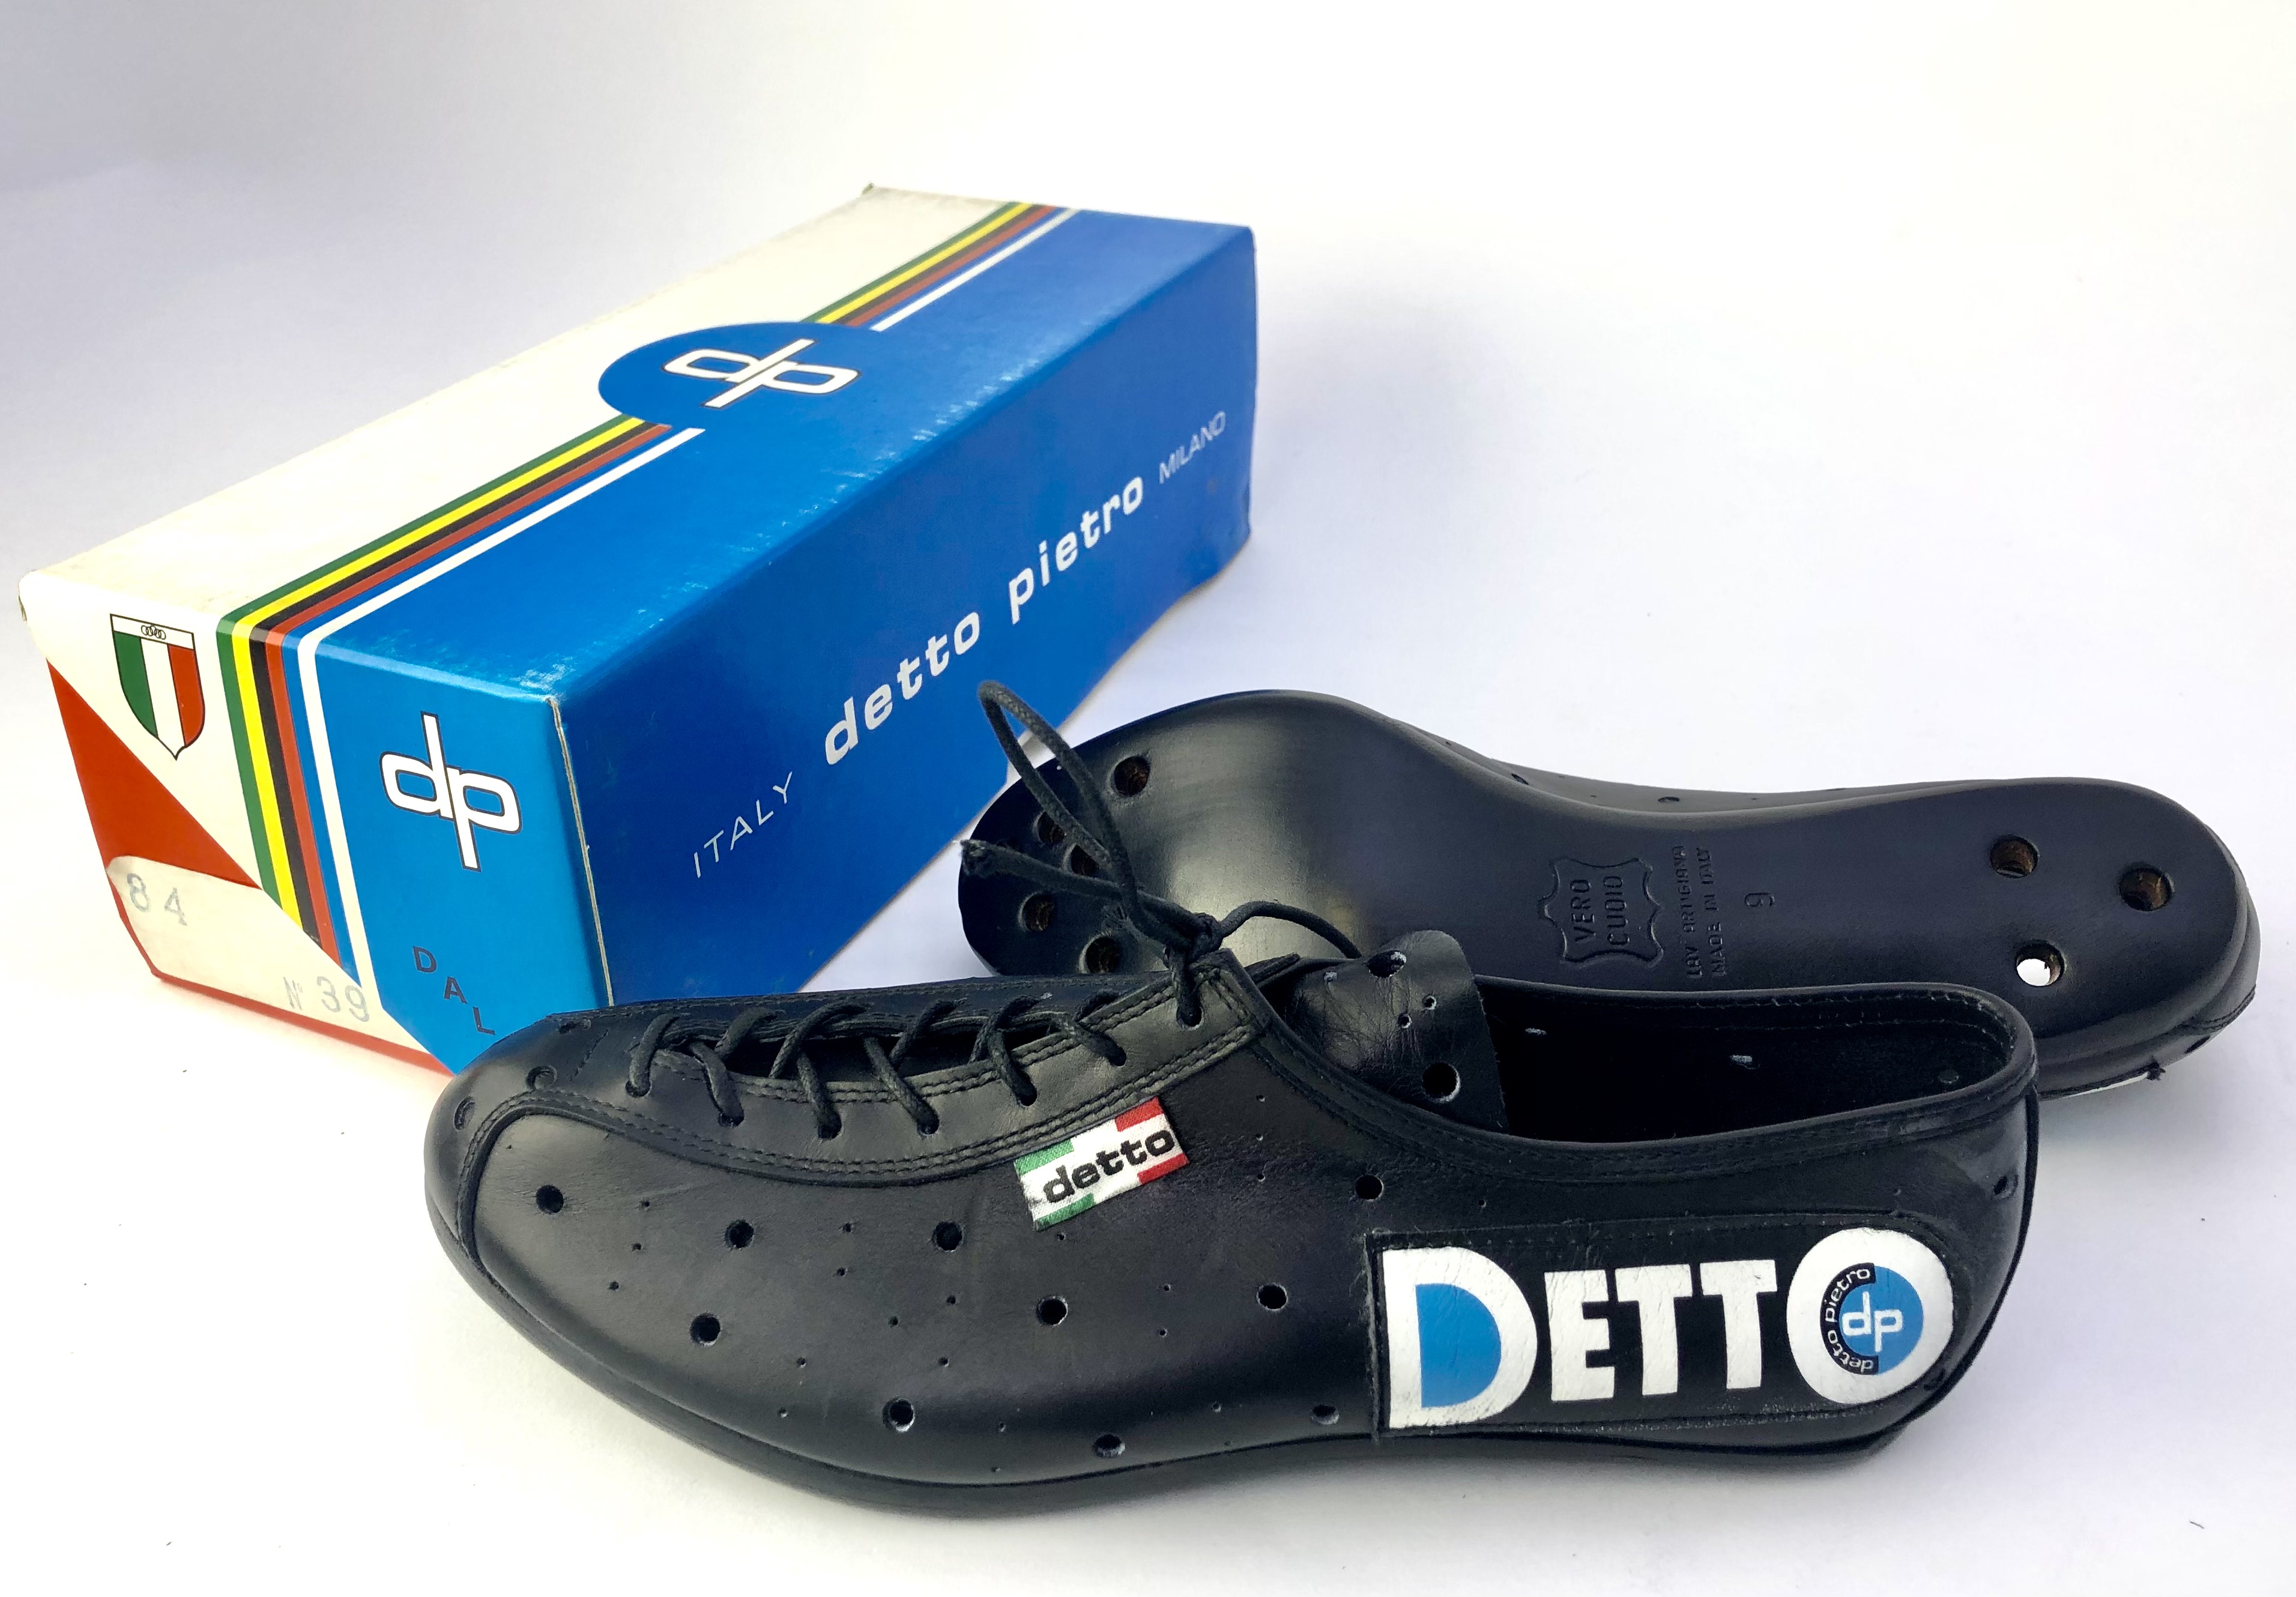 NOS Vintage Detto Pietro Mod. 84 Cycling Shoes Size 40